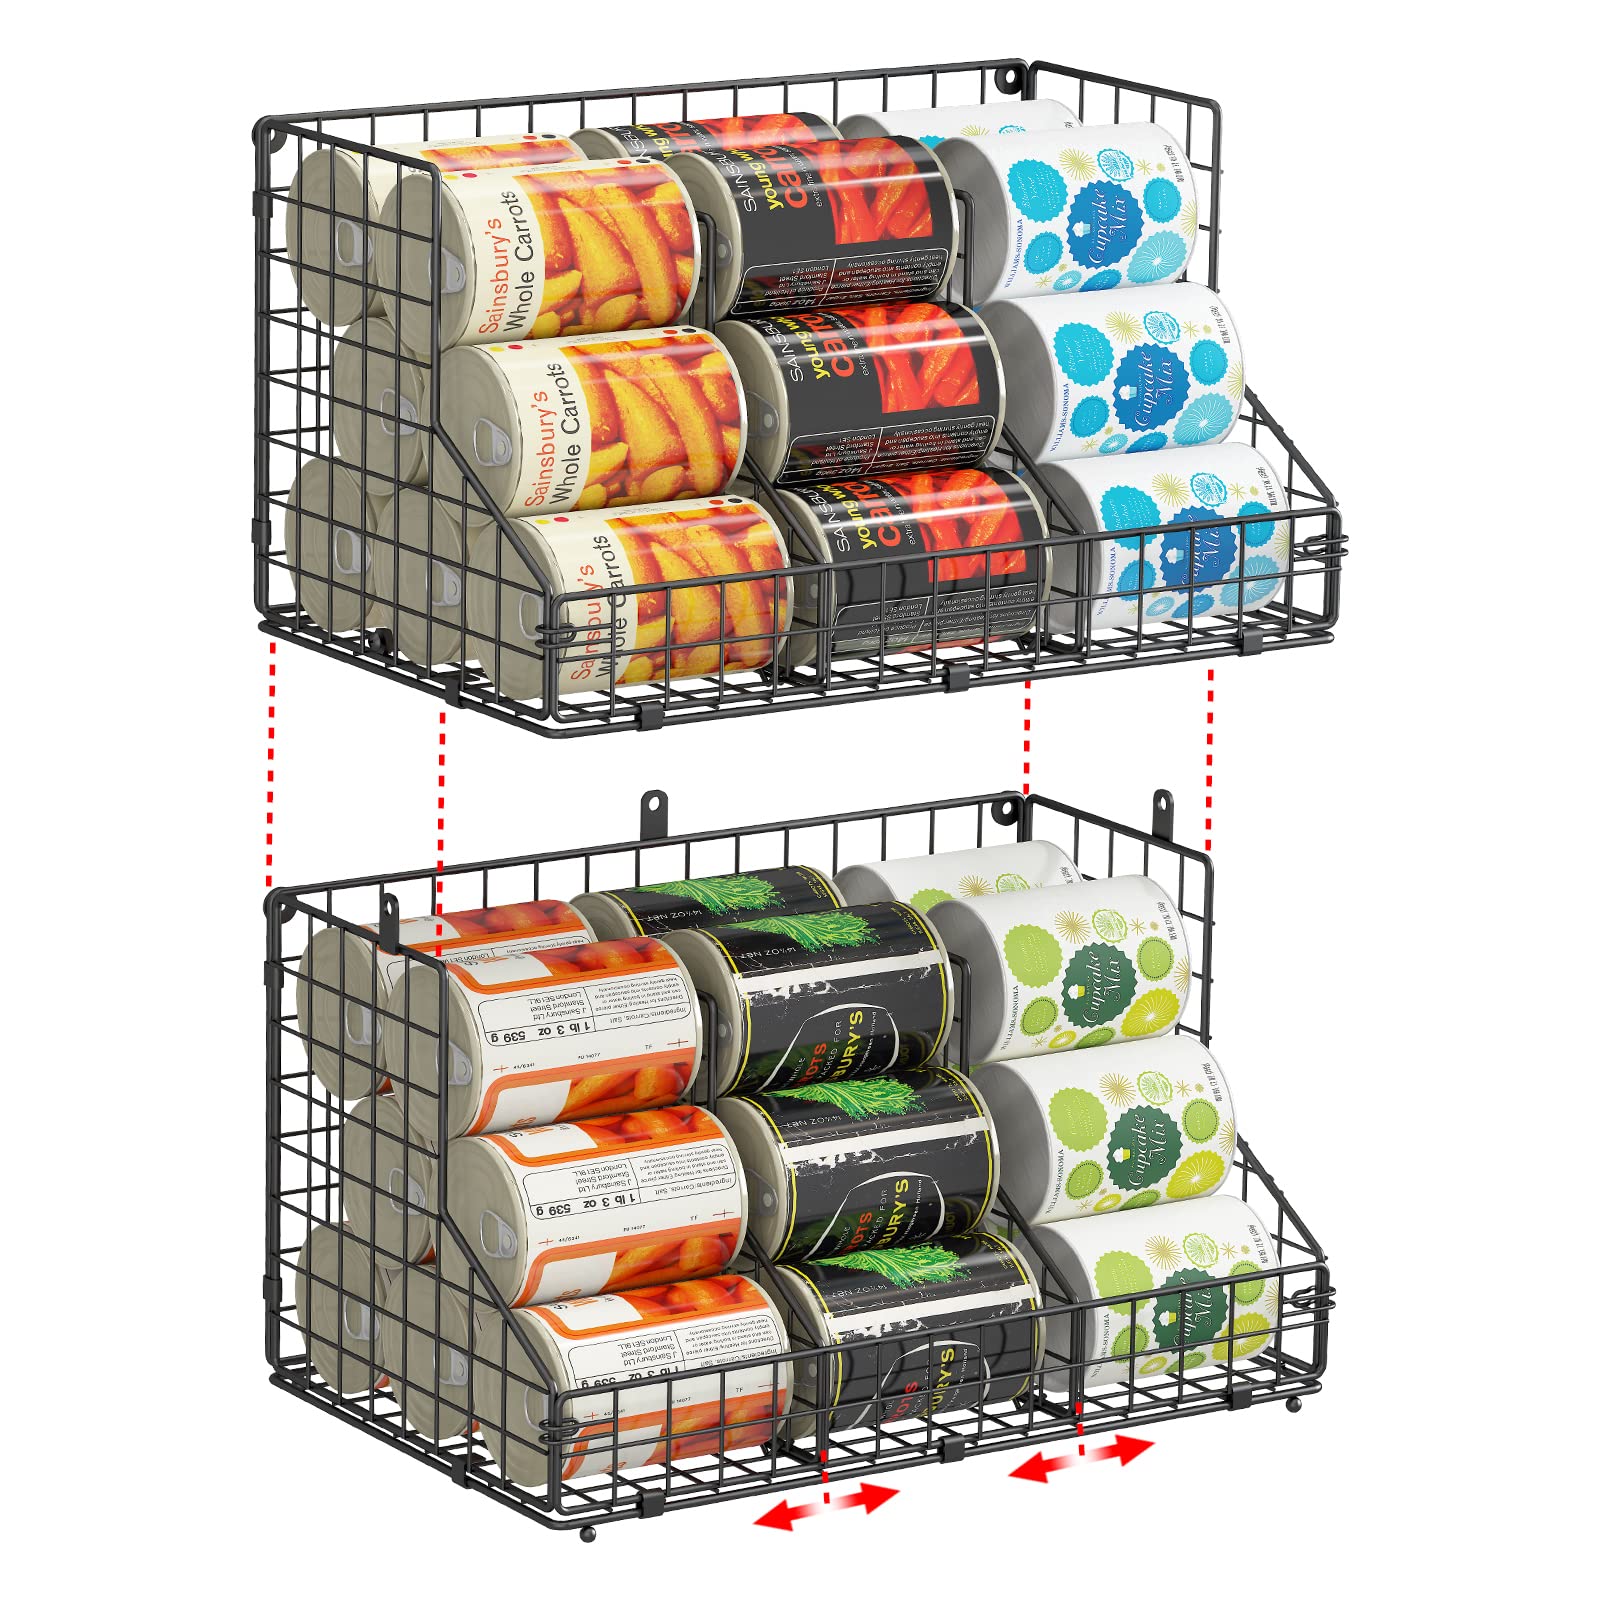 JKsmart Stackable Can Rack Organizer for Pantry Storage,Can Dispensers with 4 Adjustable Dividers, 2-Tier Metal Wire Basket Beverage Pop Soda Rack for Kitchen Cabinet Pantry, Black